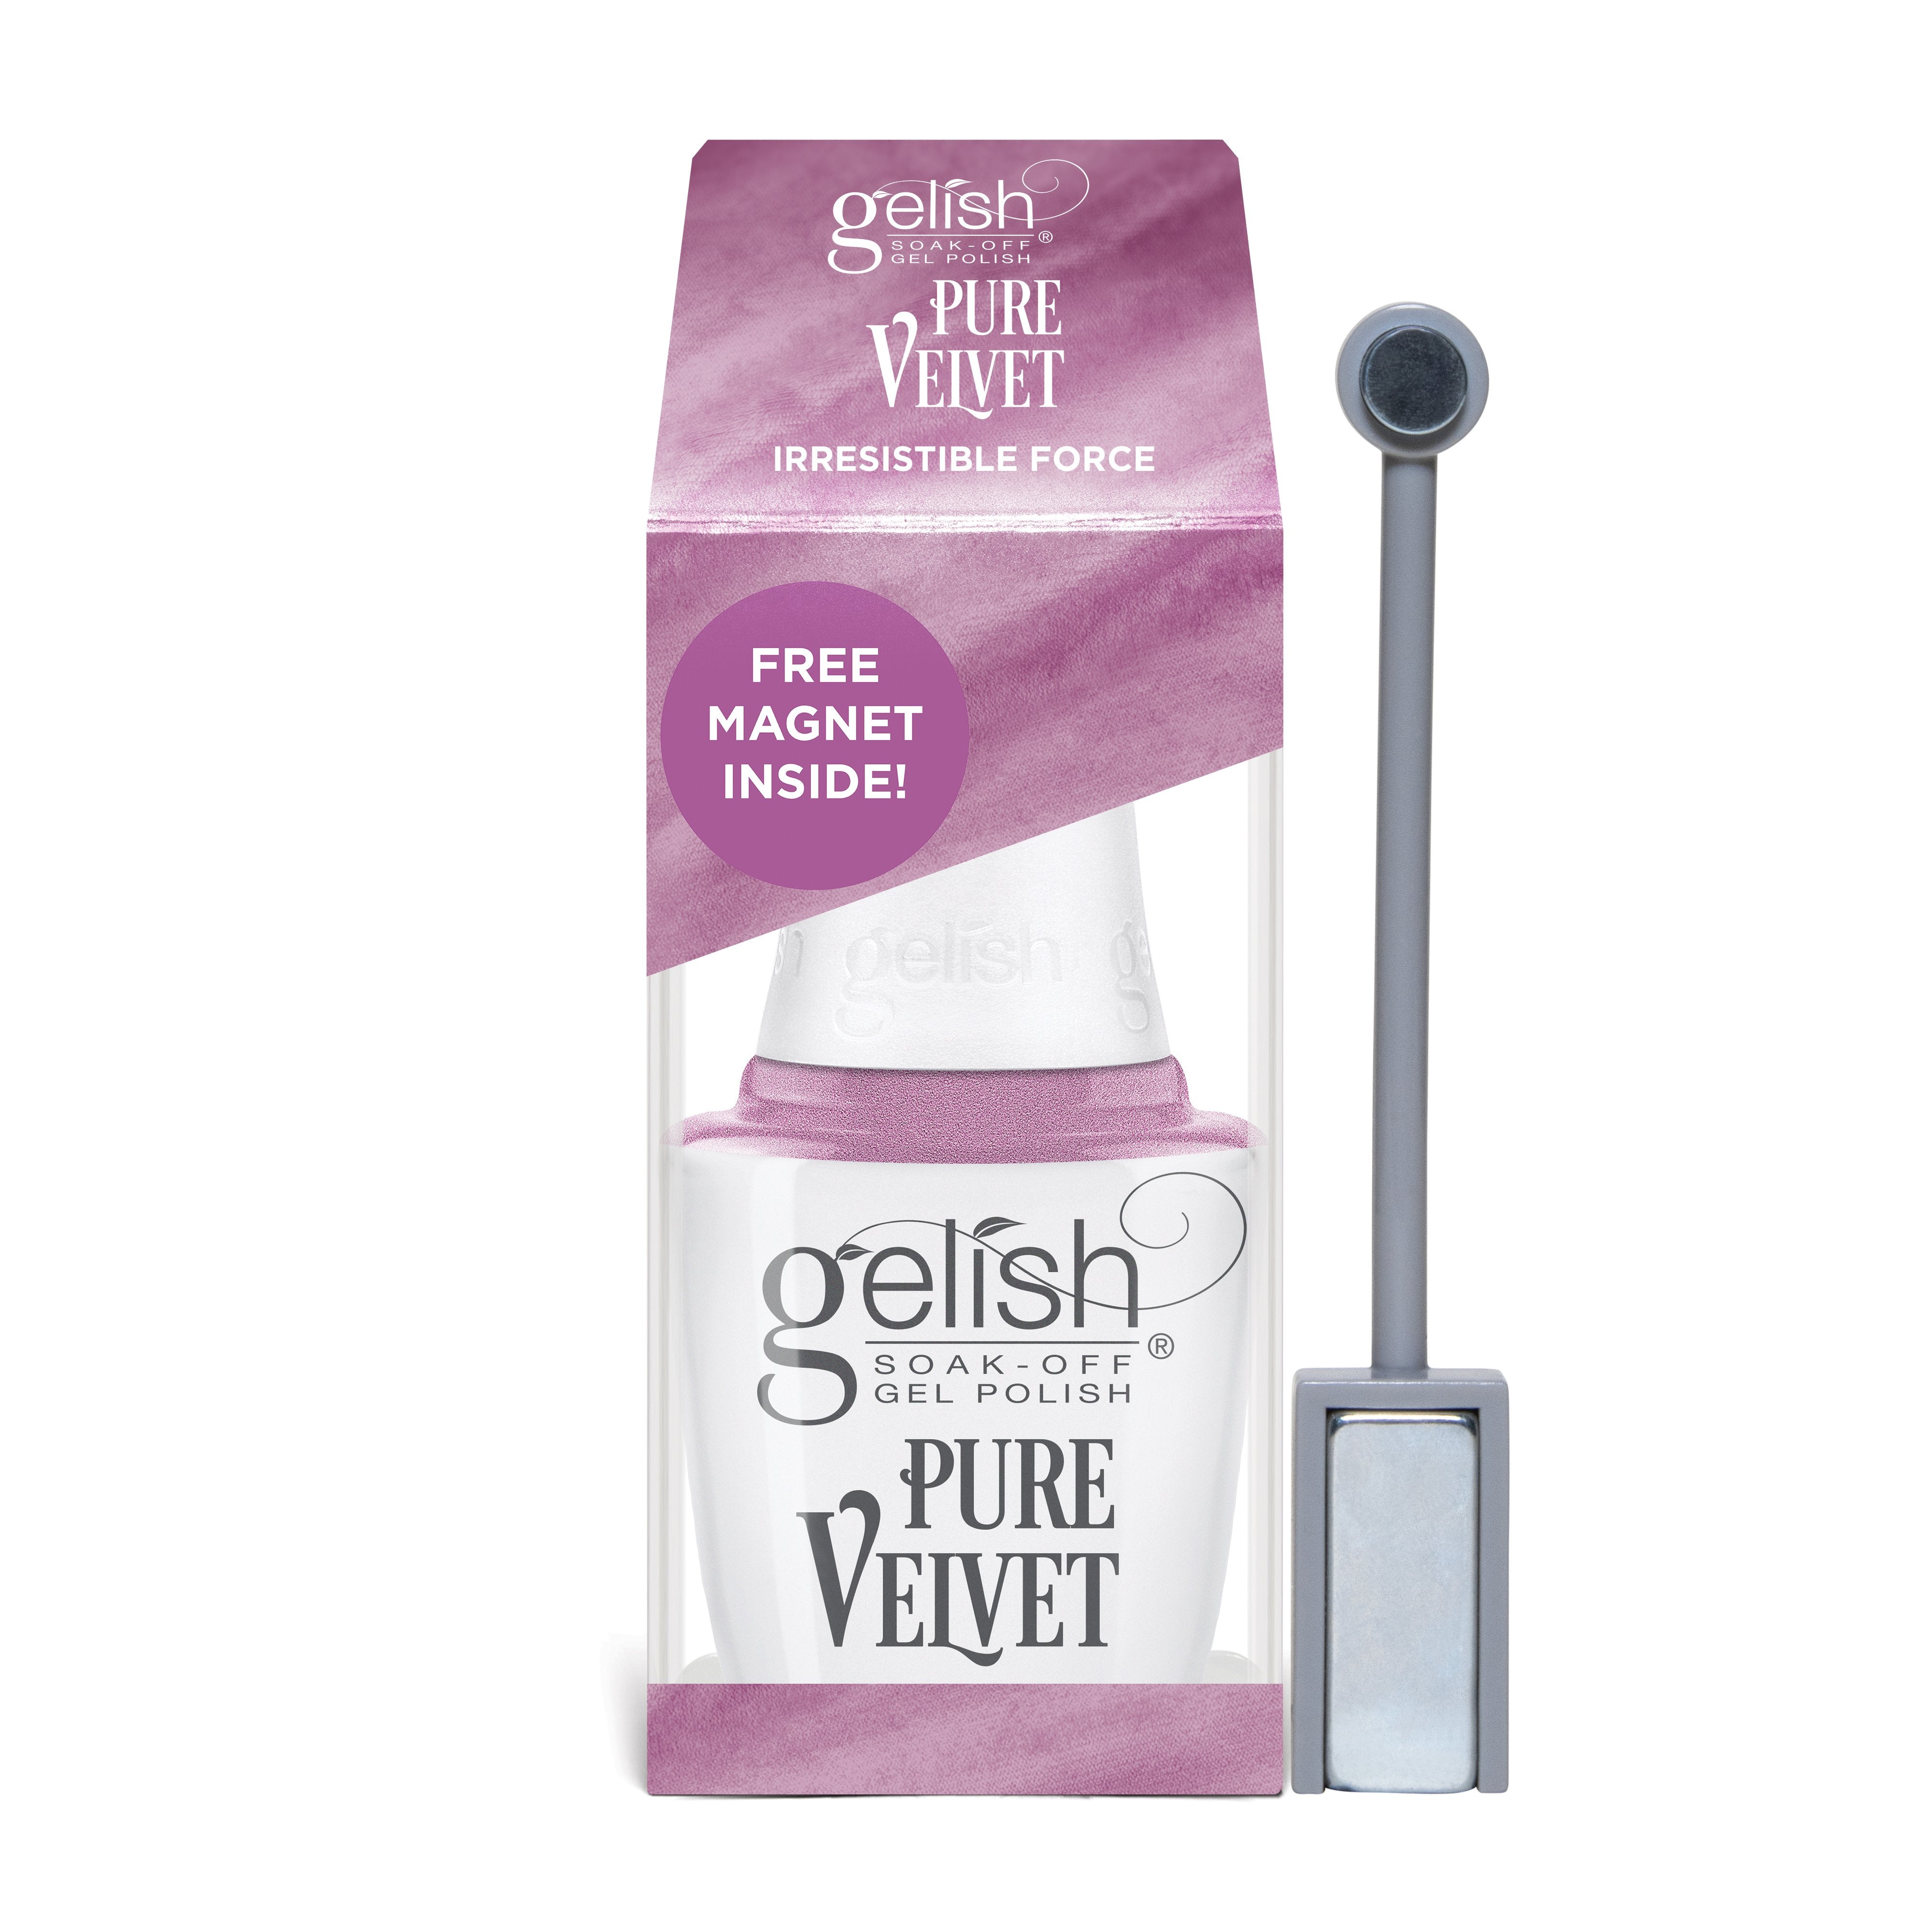 Gelish Pure Velvet - Irresistible Force